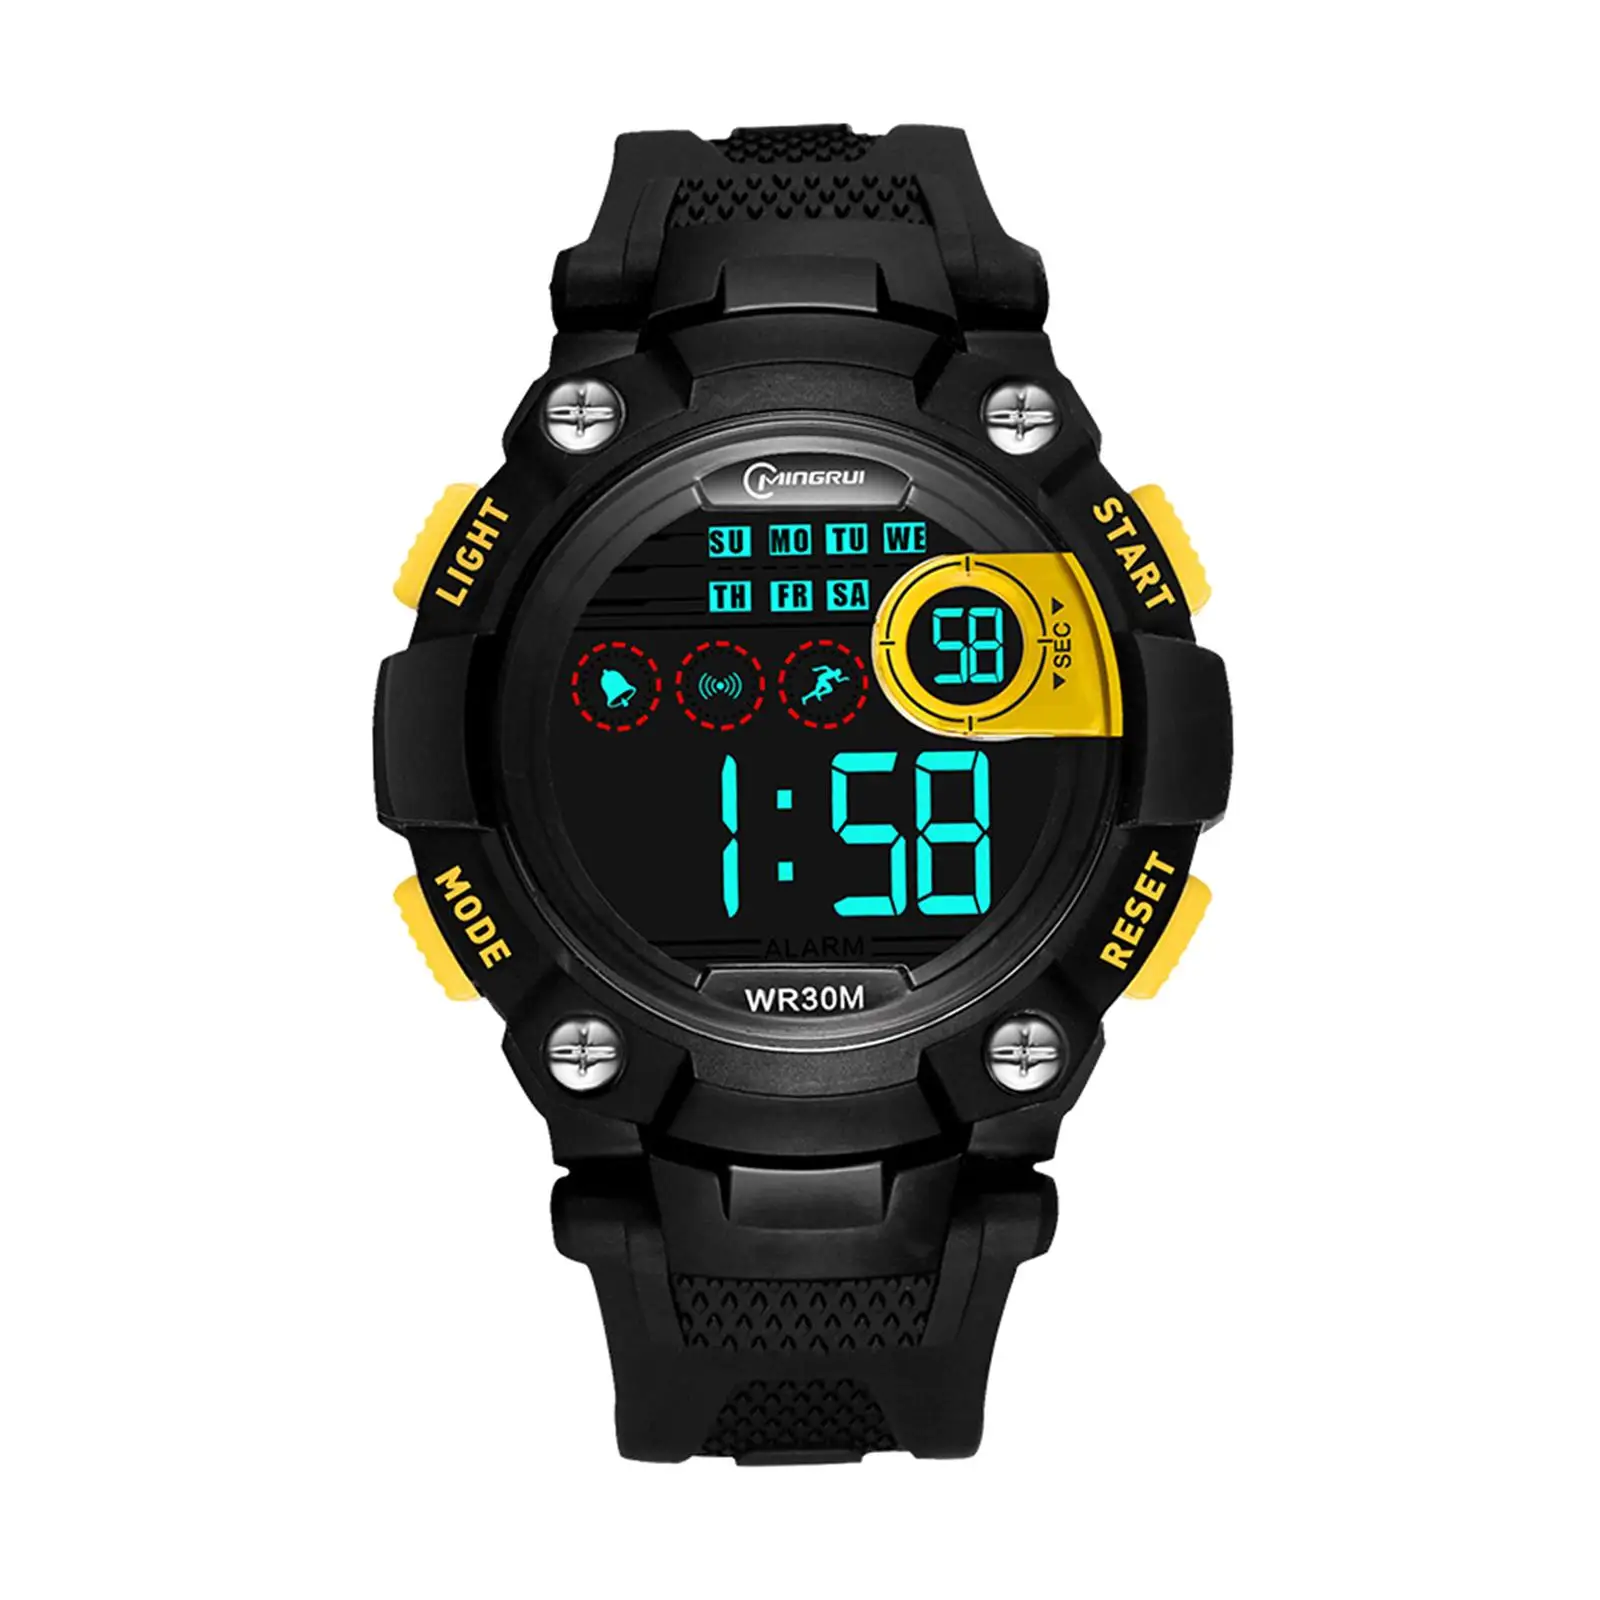 Electronic Watch Waterproof Chronograph Alarm Stopwatch Luminous Digital Watch Wrist Watch for Sports Outdoor Male Boys Student